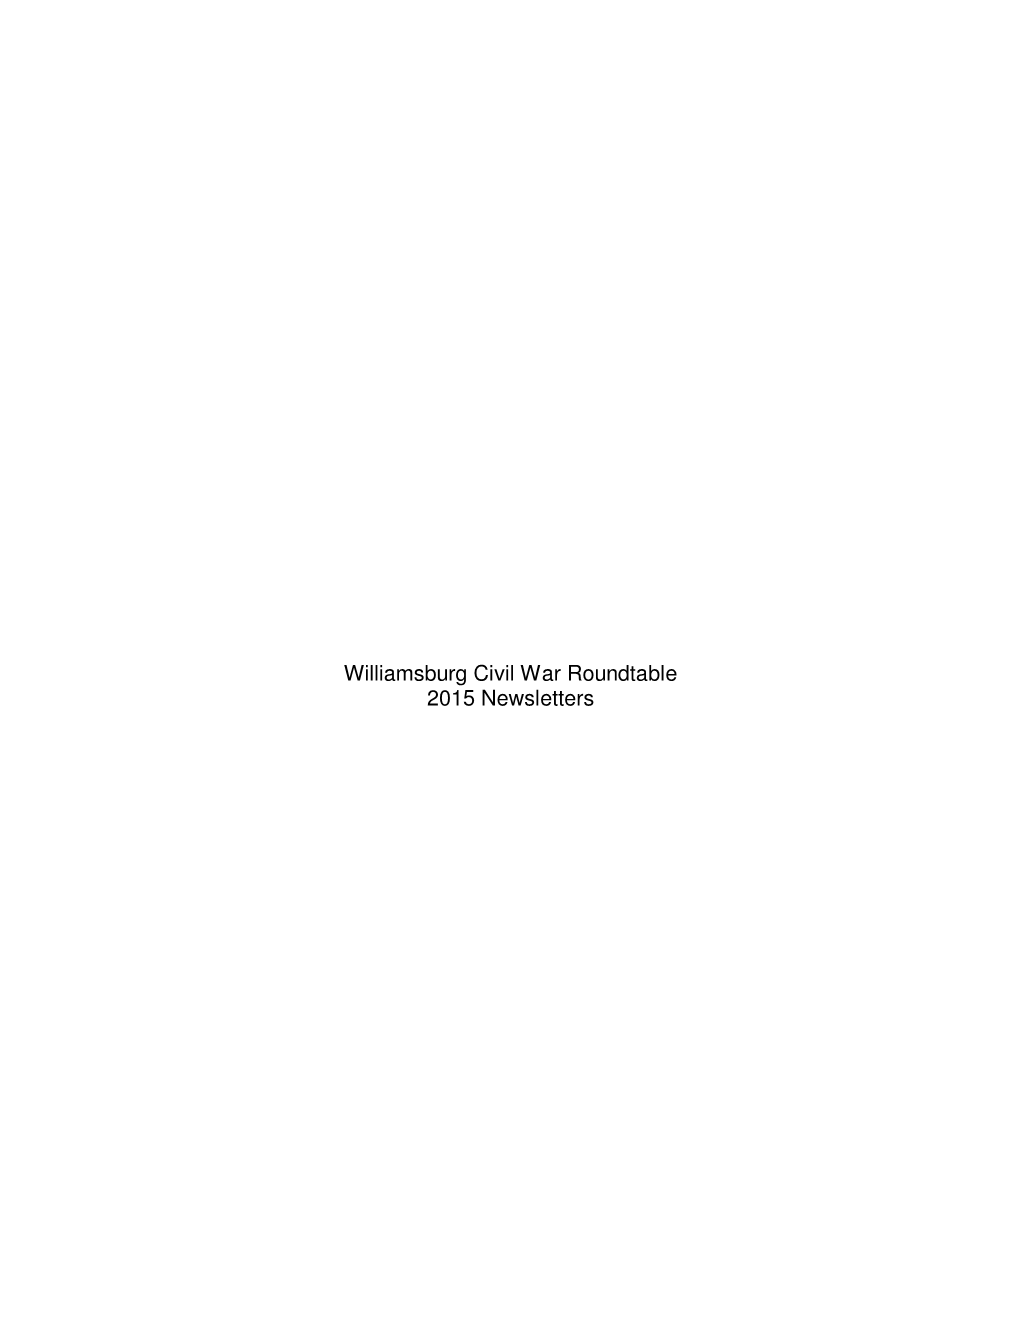 Williamsburg Civil War Roundtable 2015 Newsletters